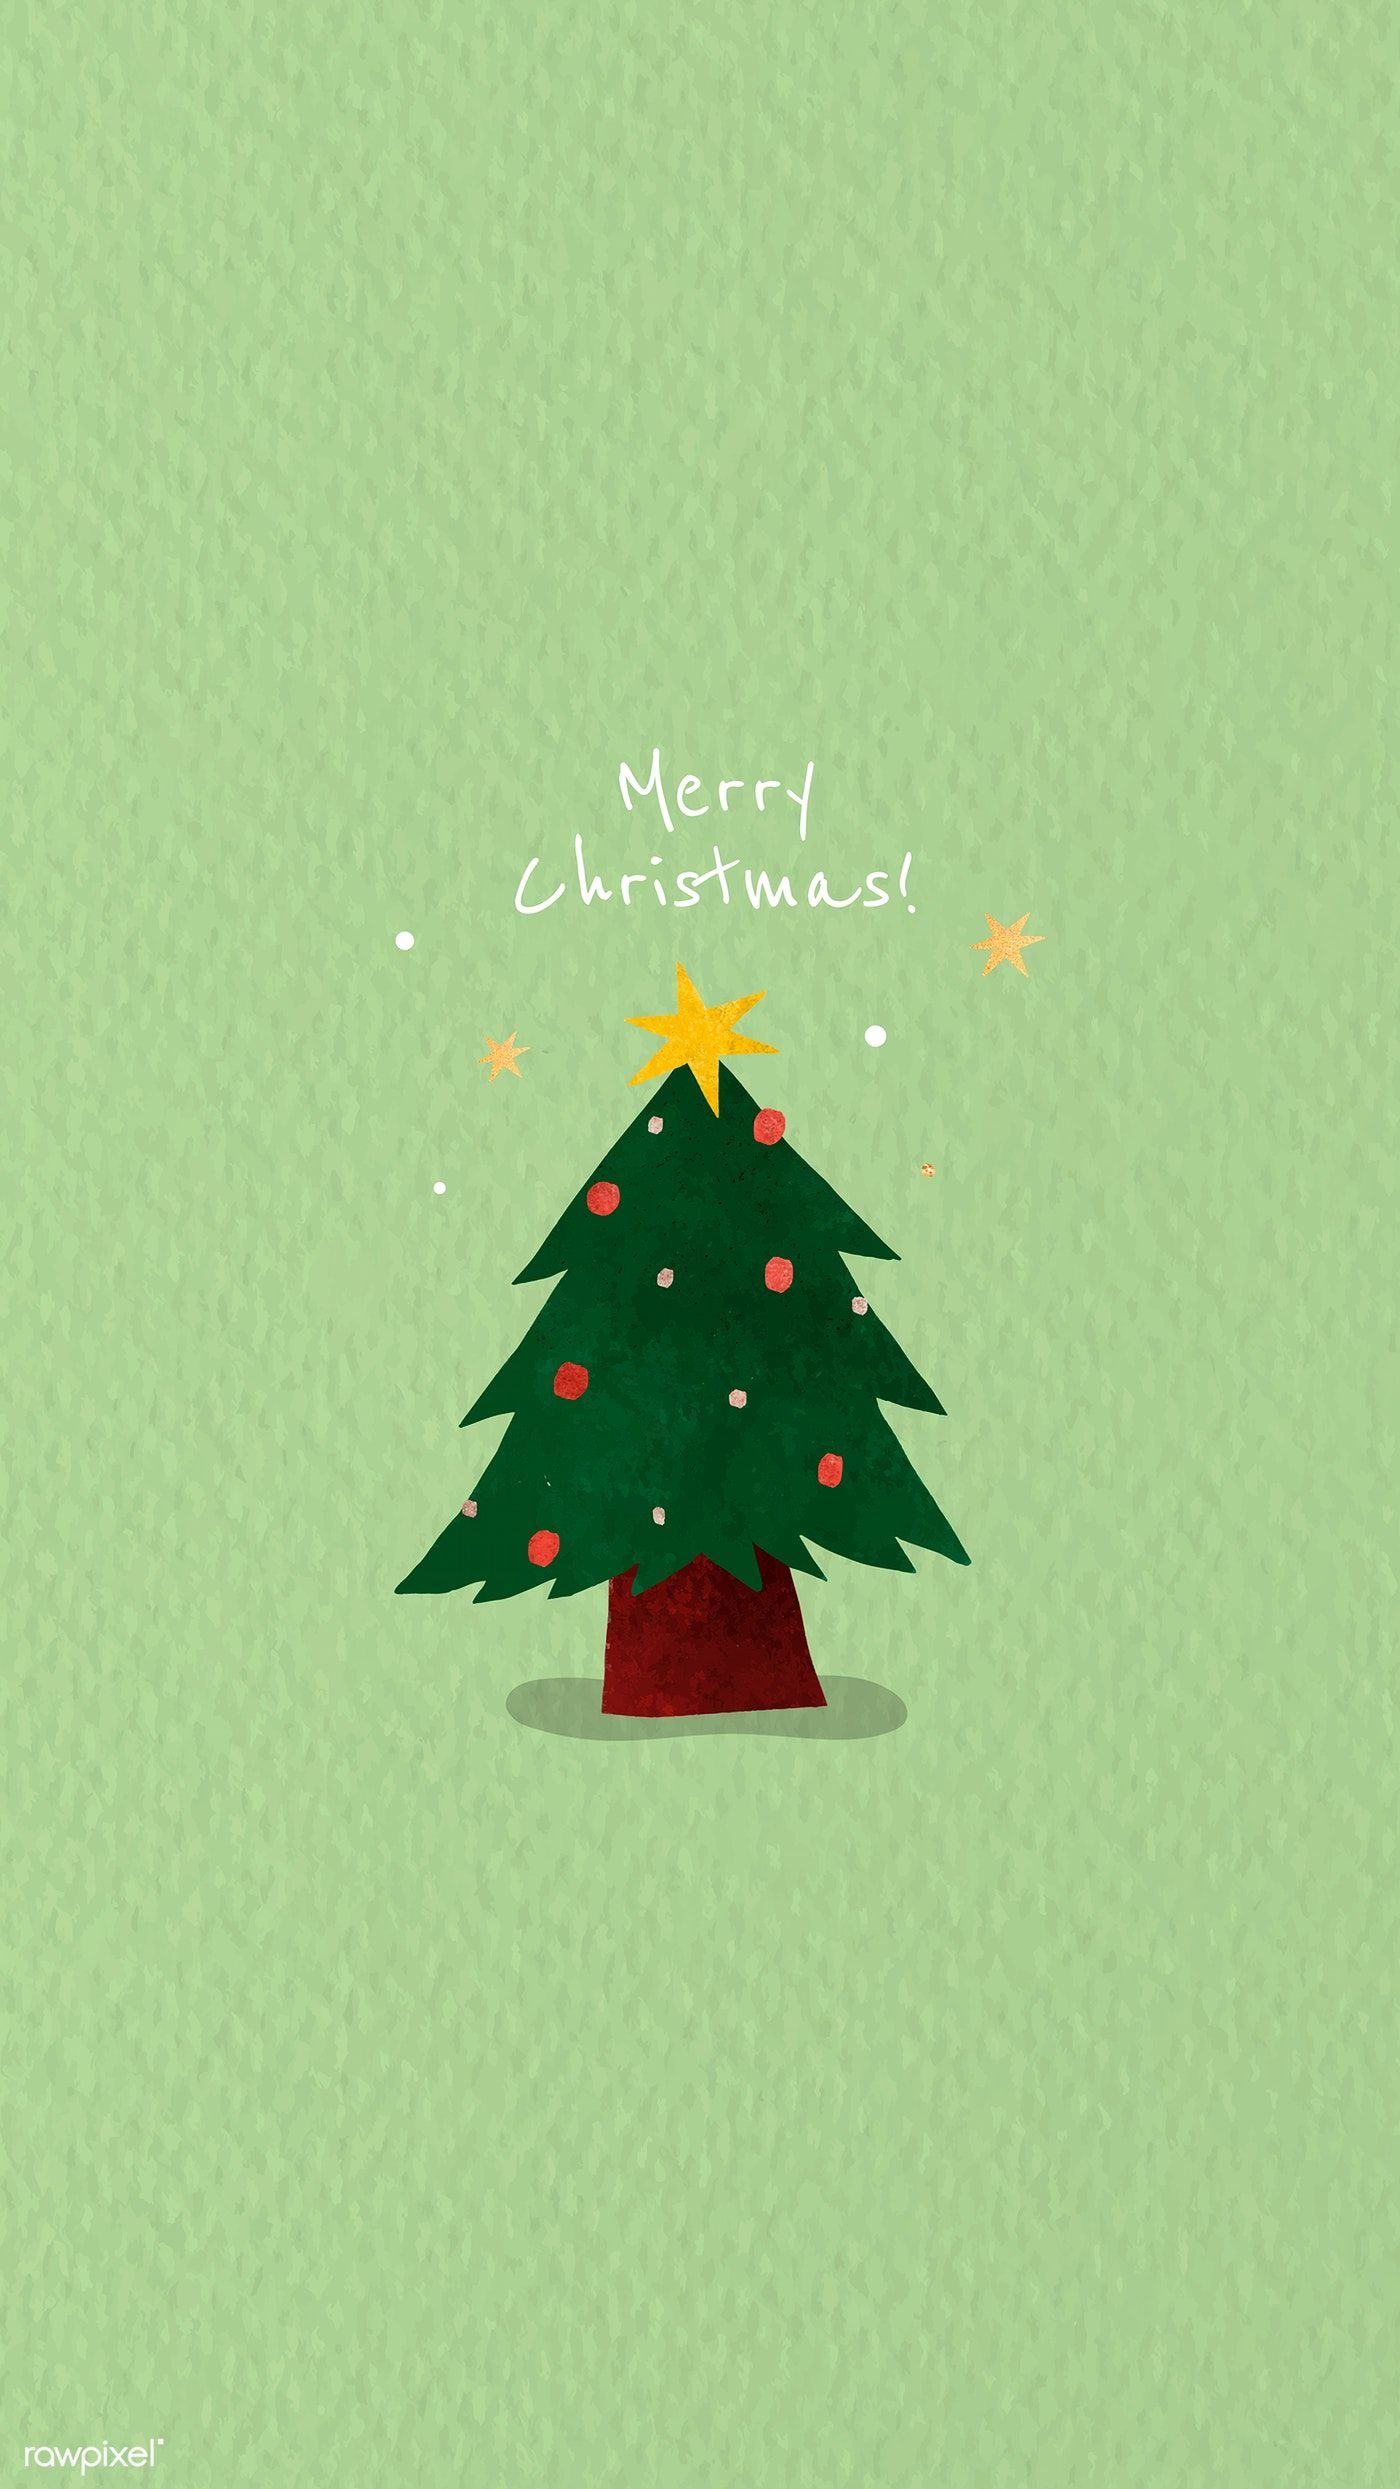 Cute Aesthetic Christmas Trees Wallpaper